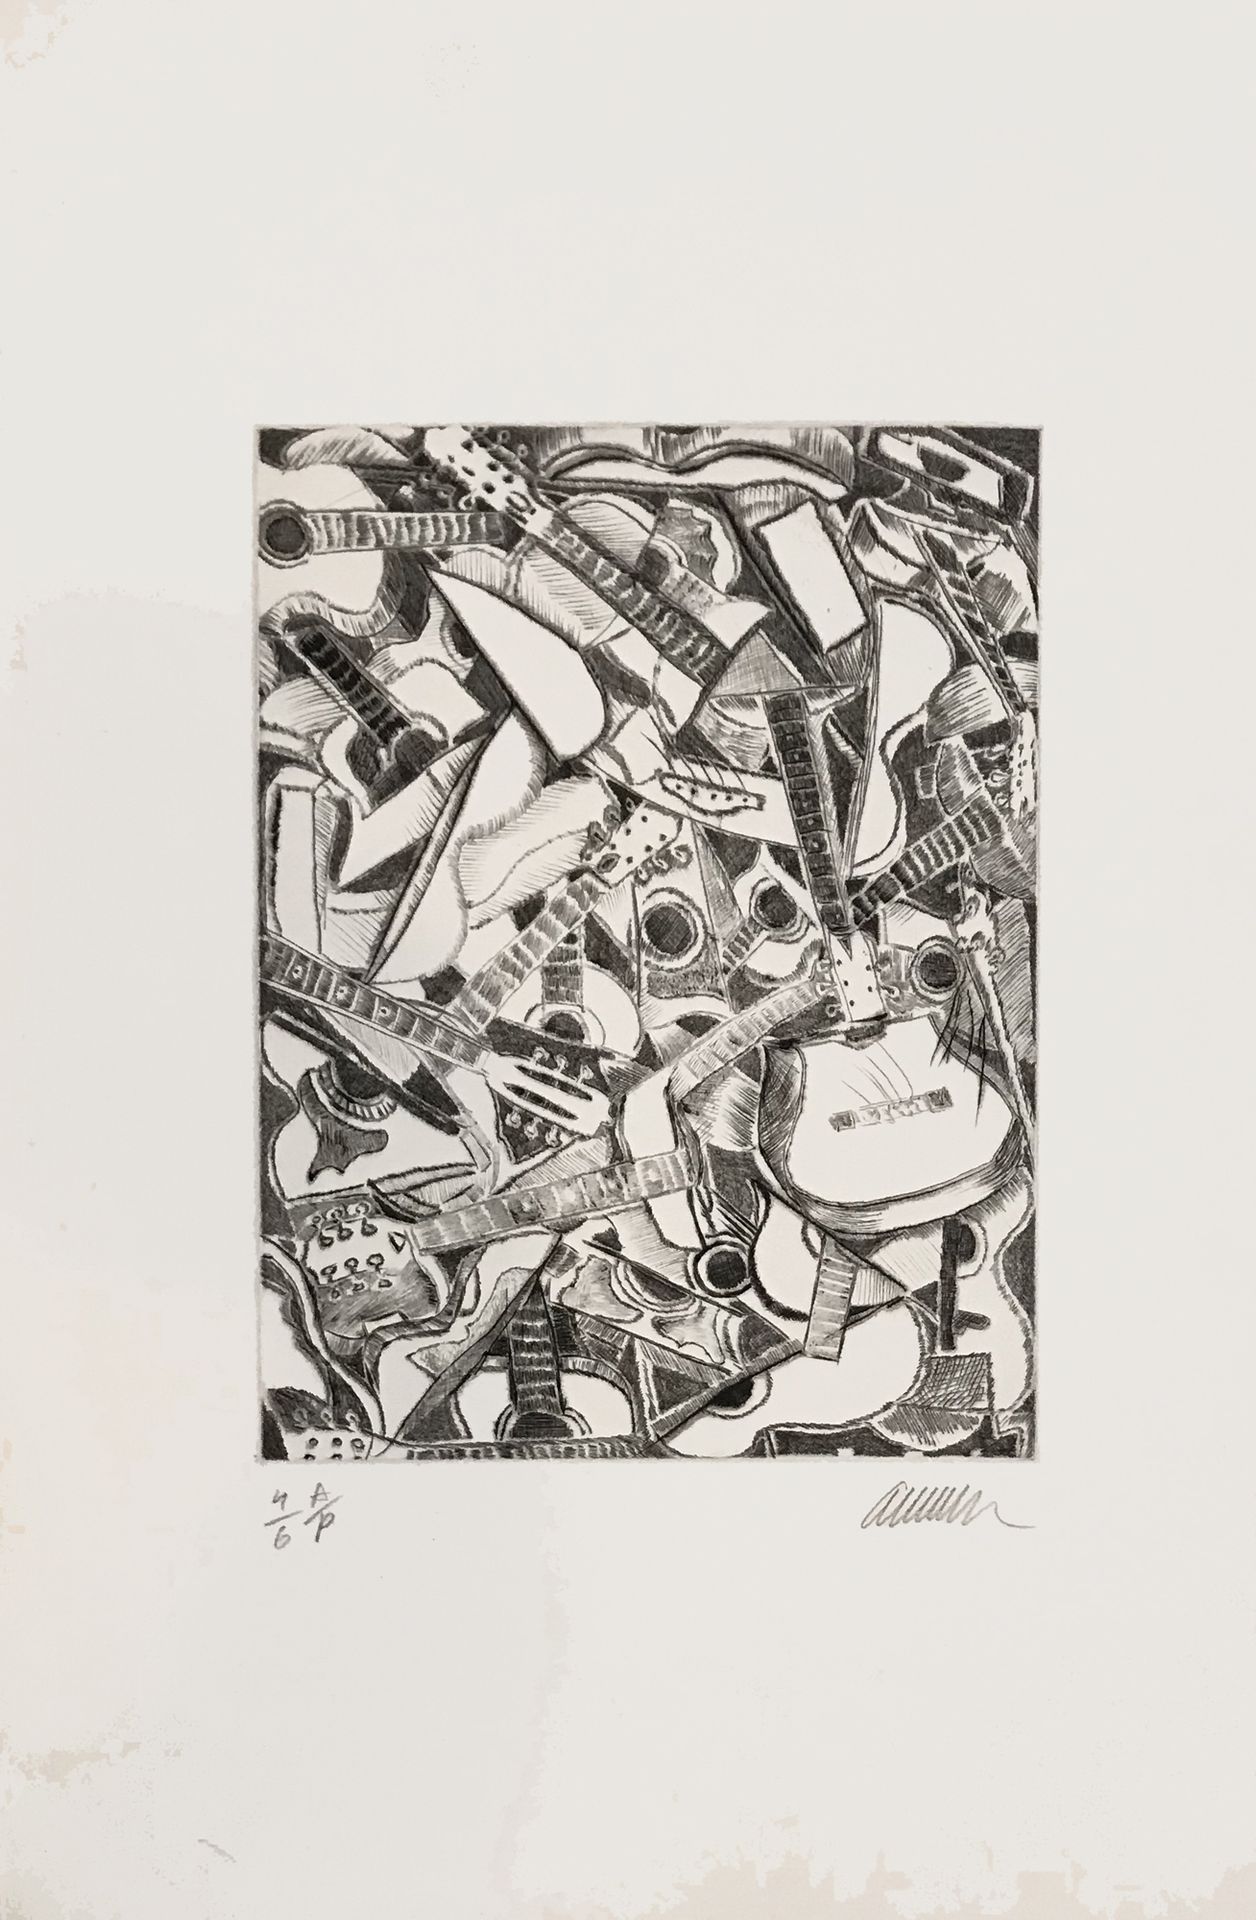 ARMAN (1928-2005) Accumulation de guitares, 1985
Gravure pointe-sèche en noir su&hellip;